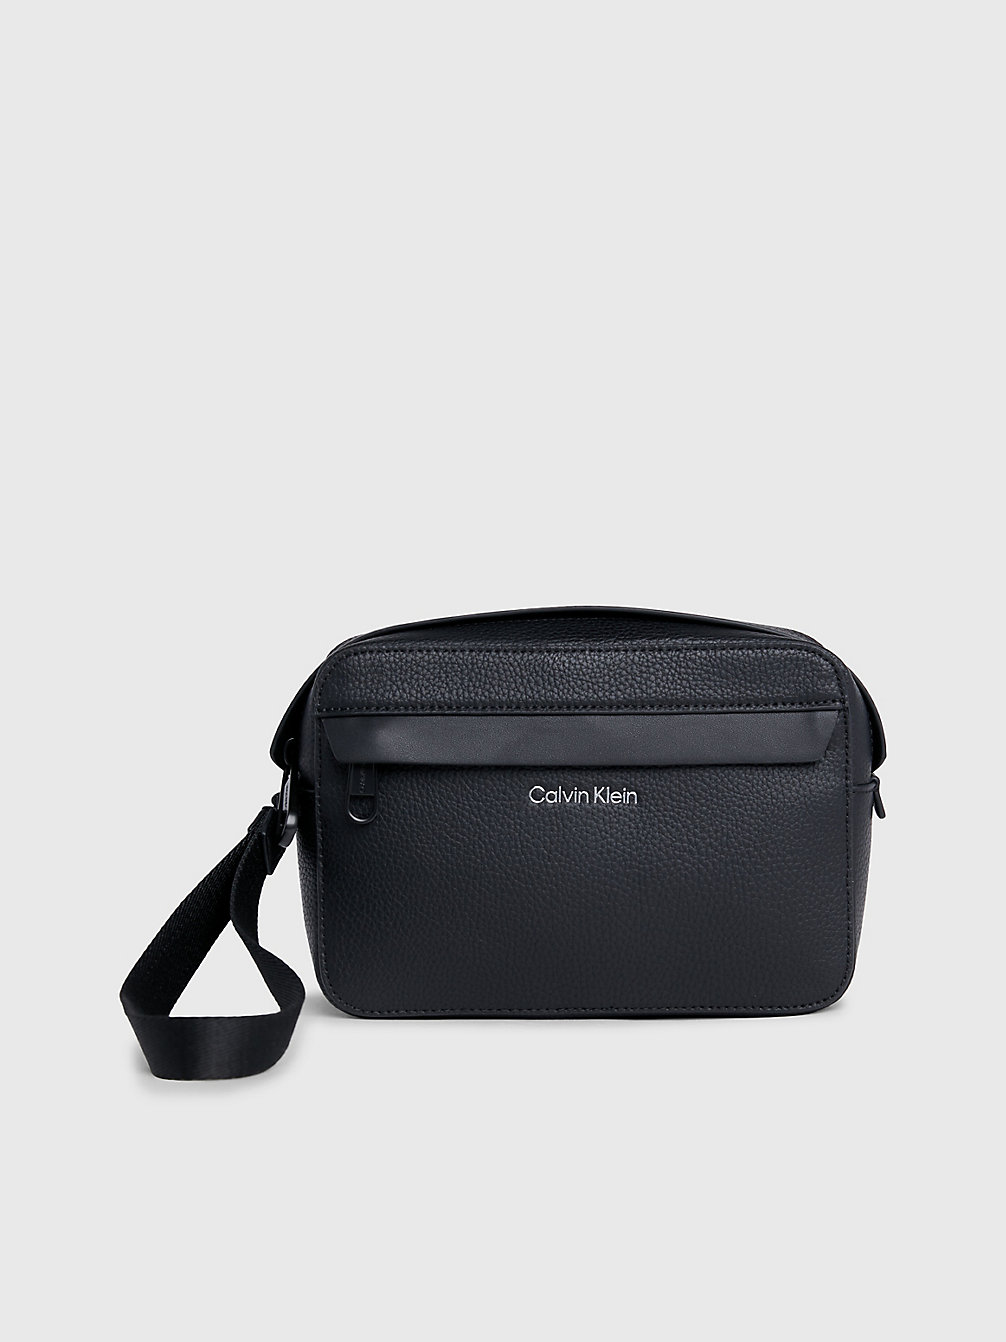 CK BLACK PEBBLE Compact Case undefined Men Calvin Klein